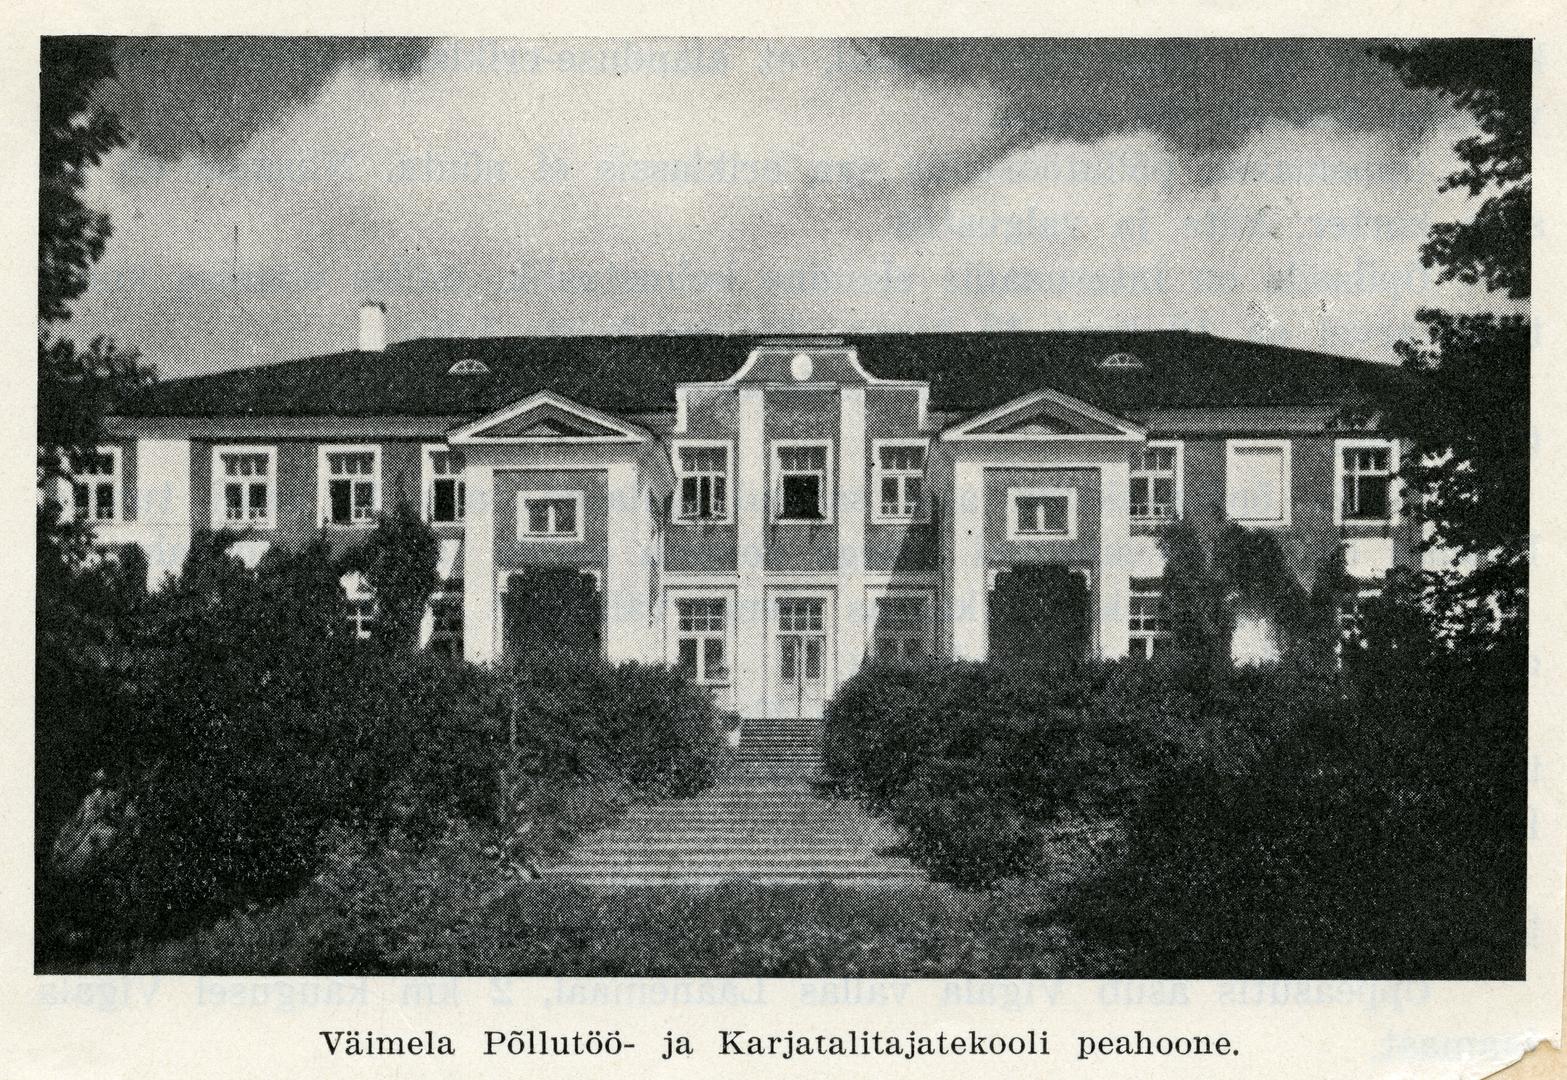 Buildings of vocational schools